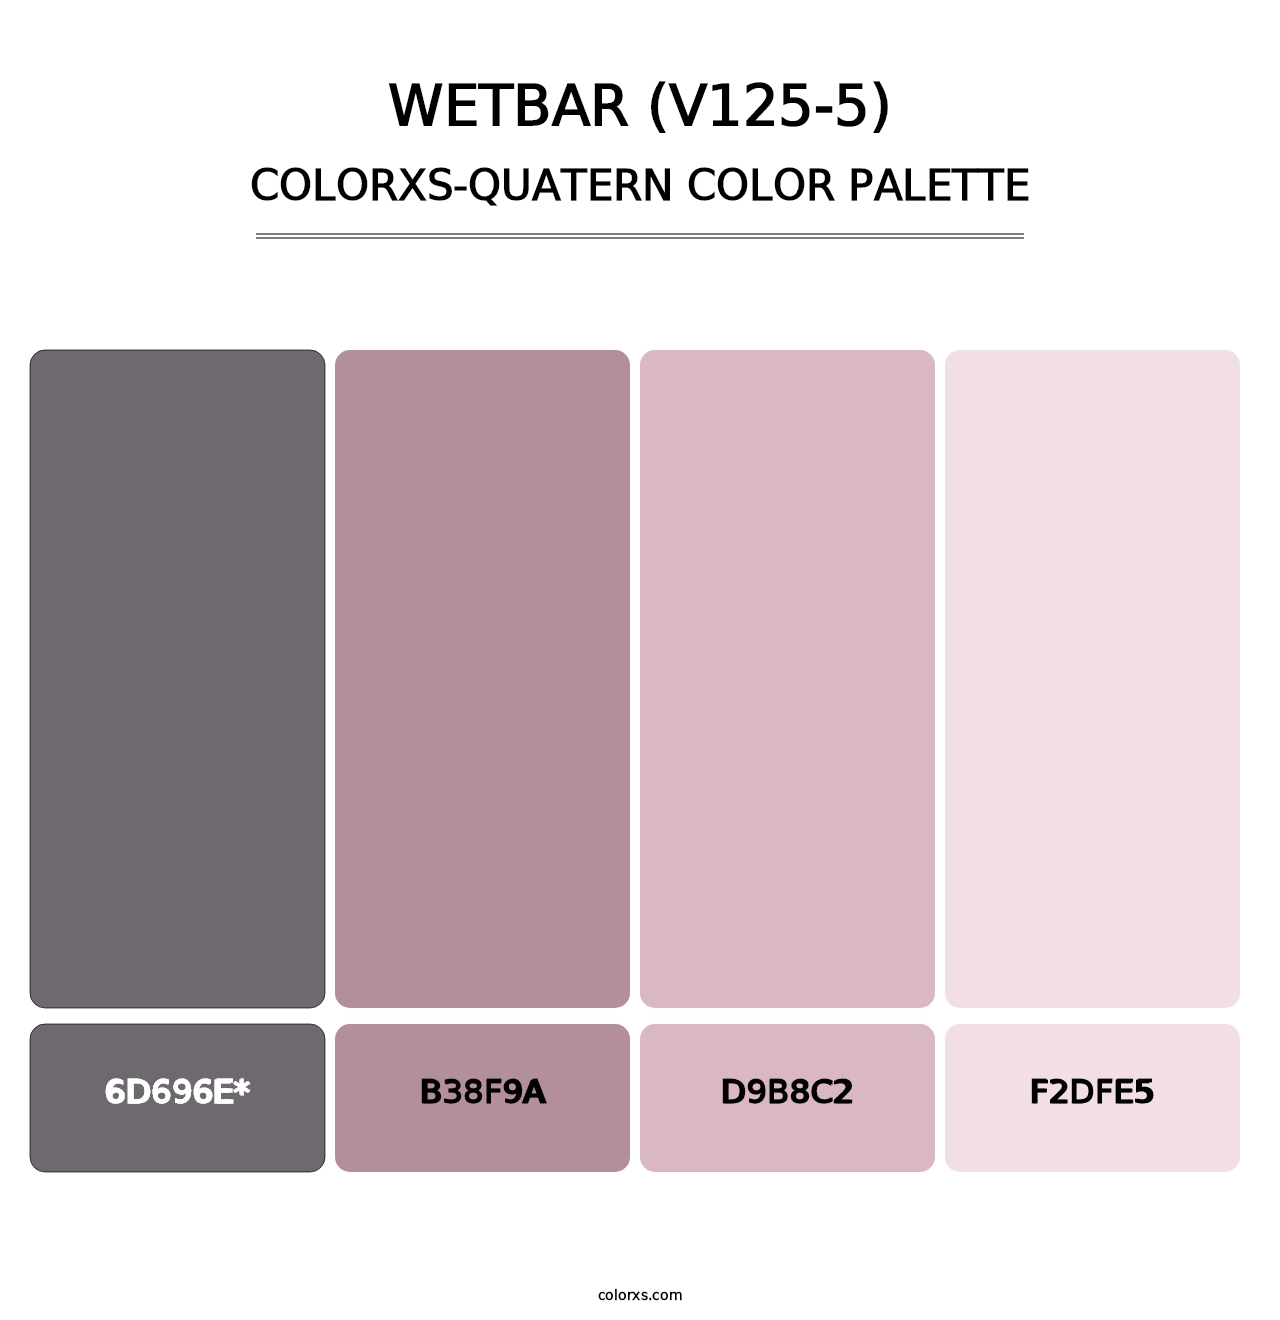 Wetbar (V125-5) - Colorxs Quatern Palette